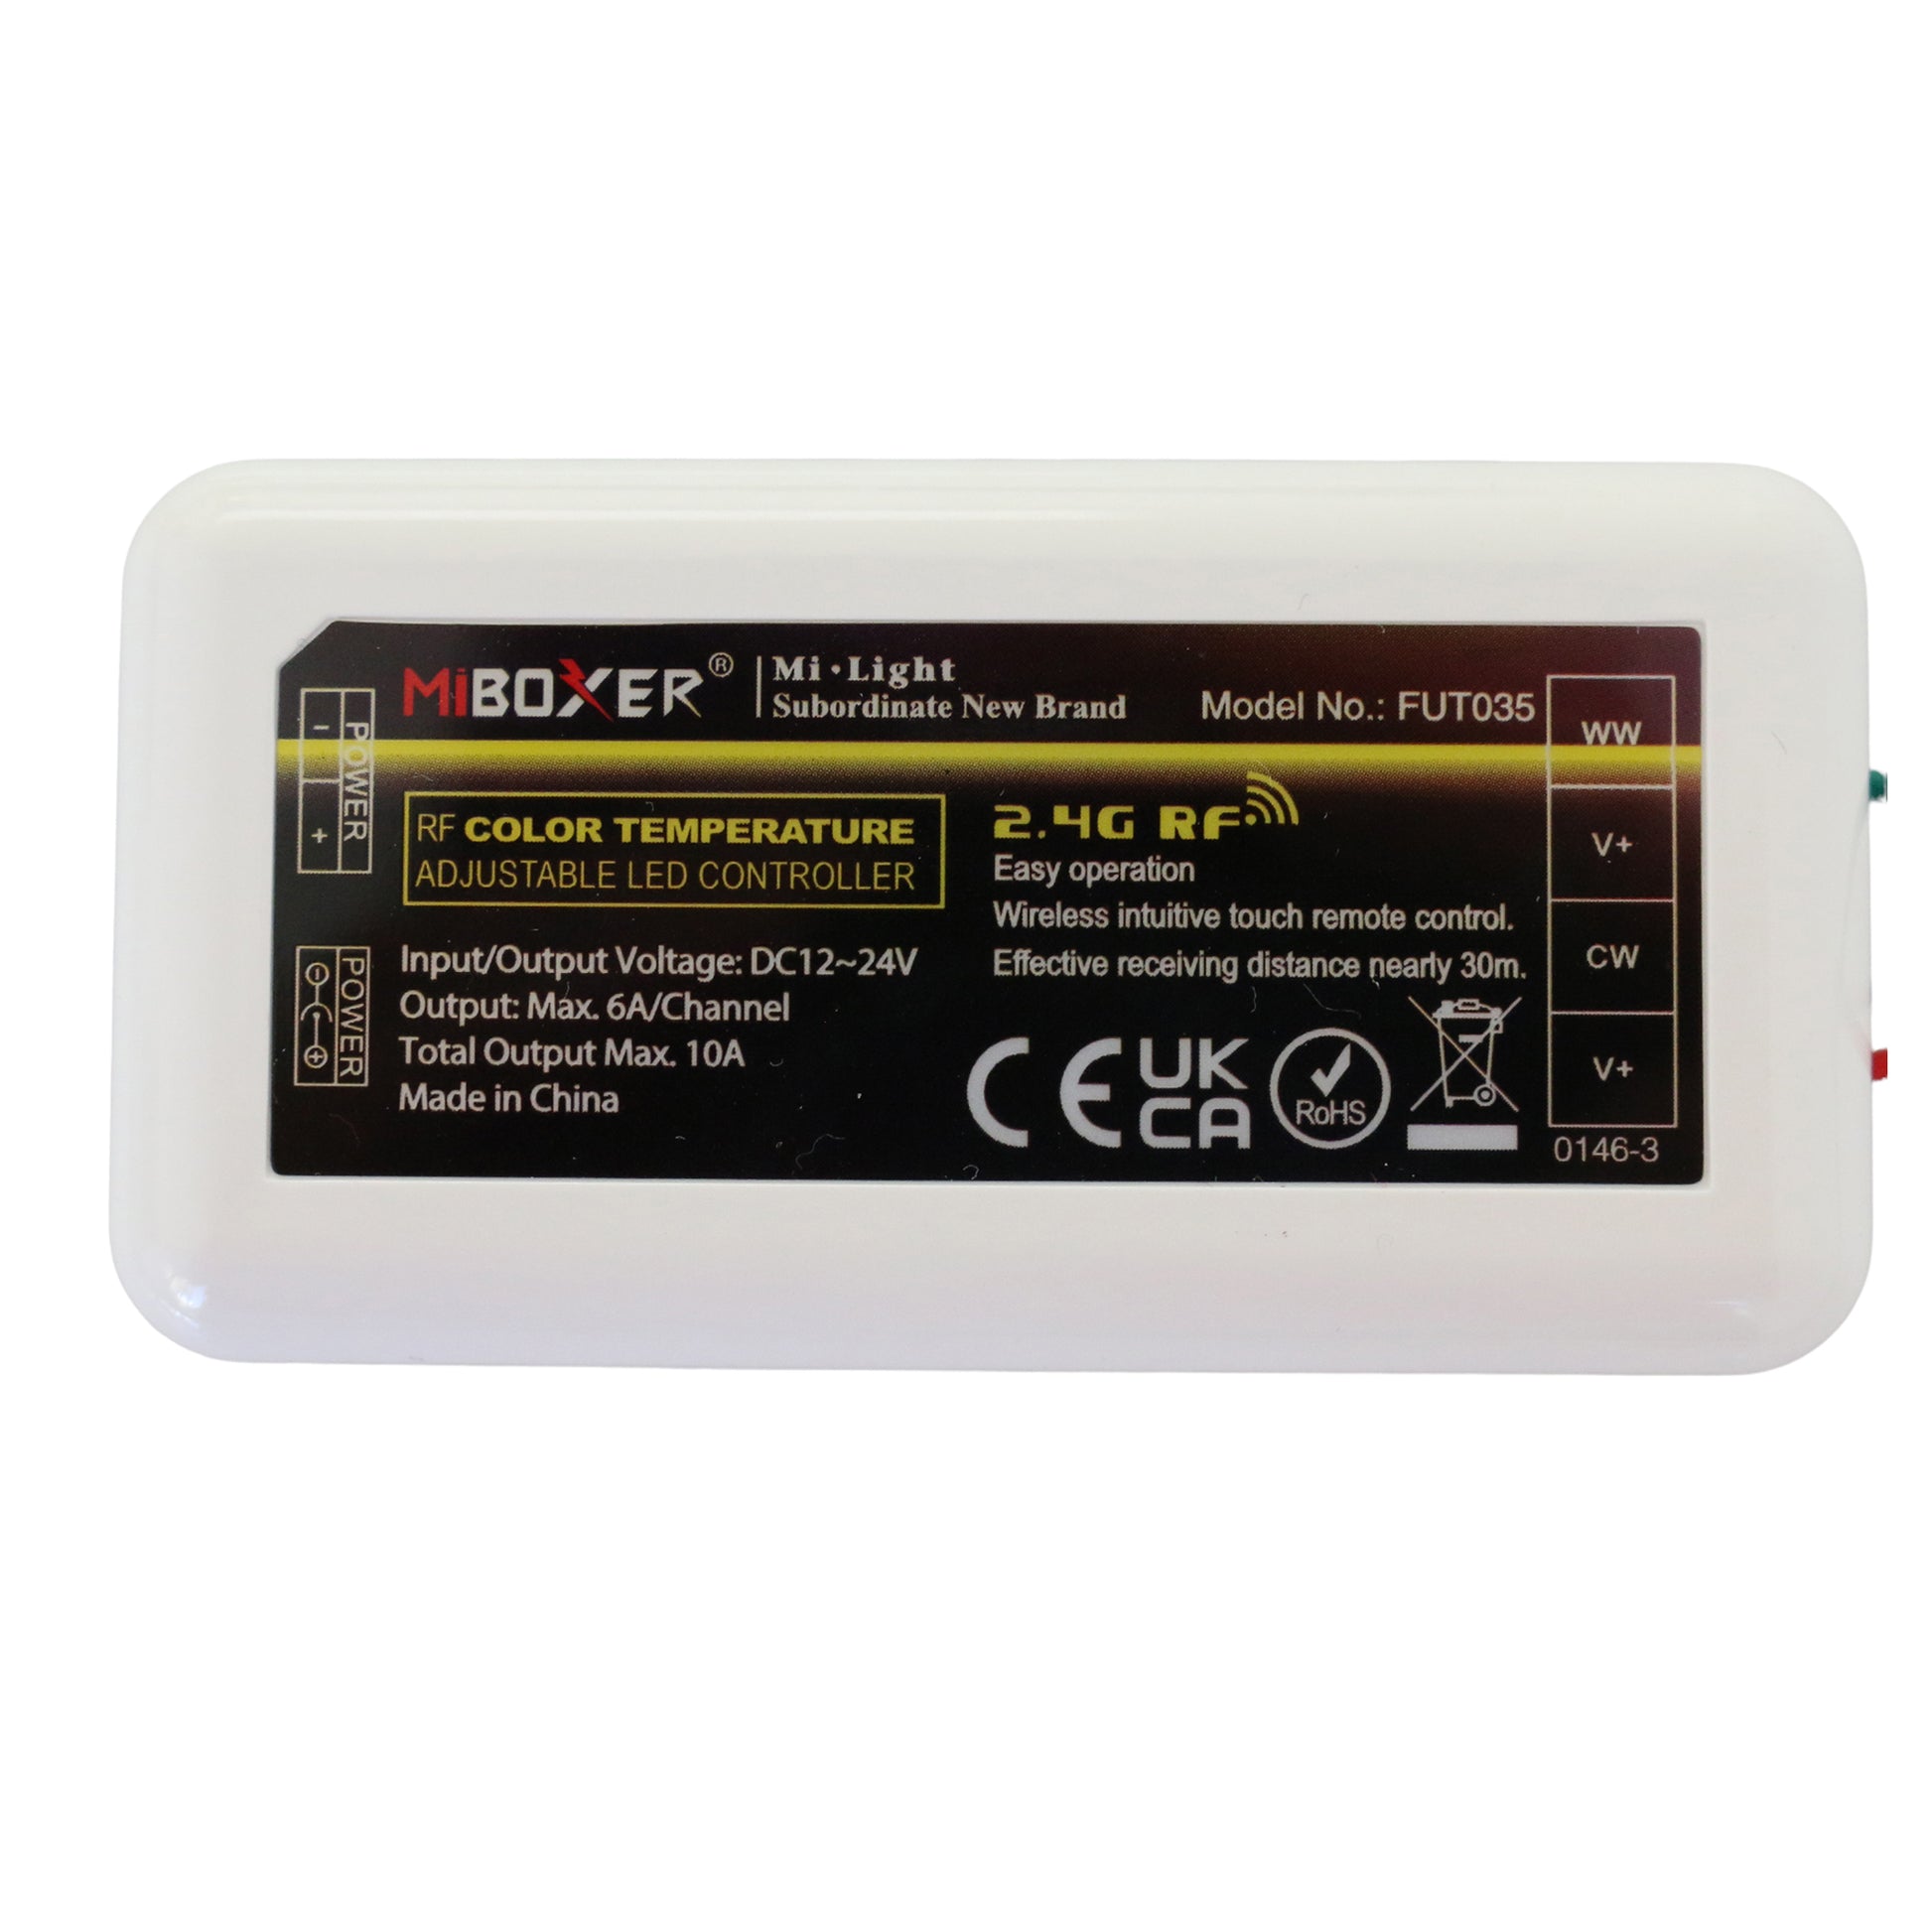 MiBoxer FUT007 CCT 2.4G Wireless Lighting Remote Control